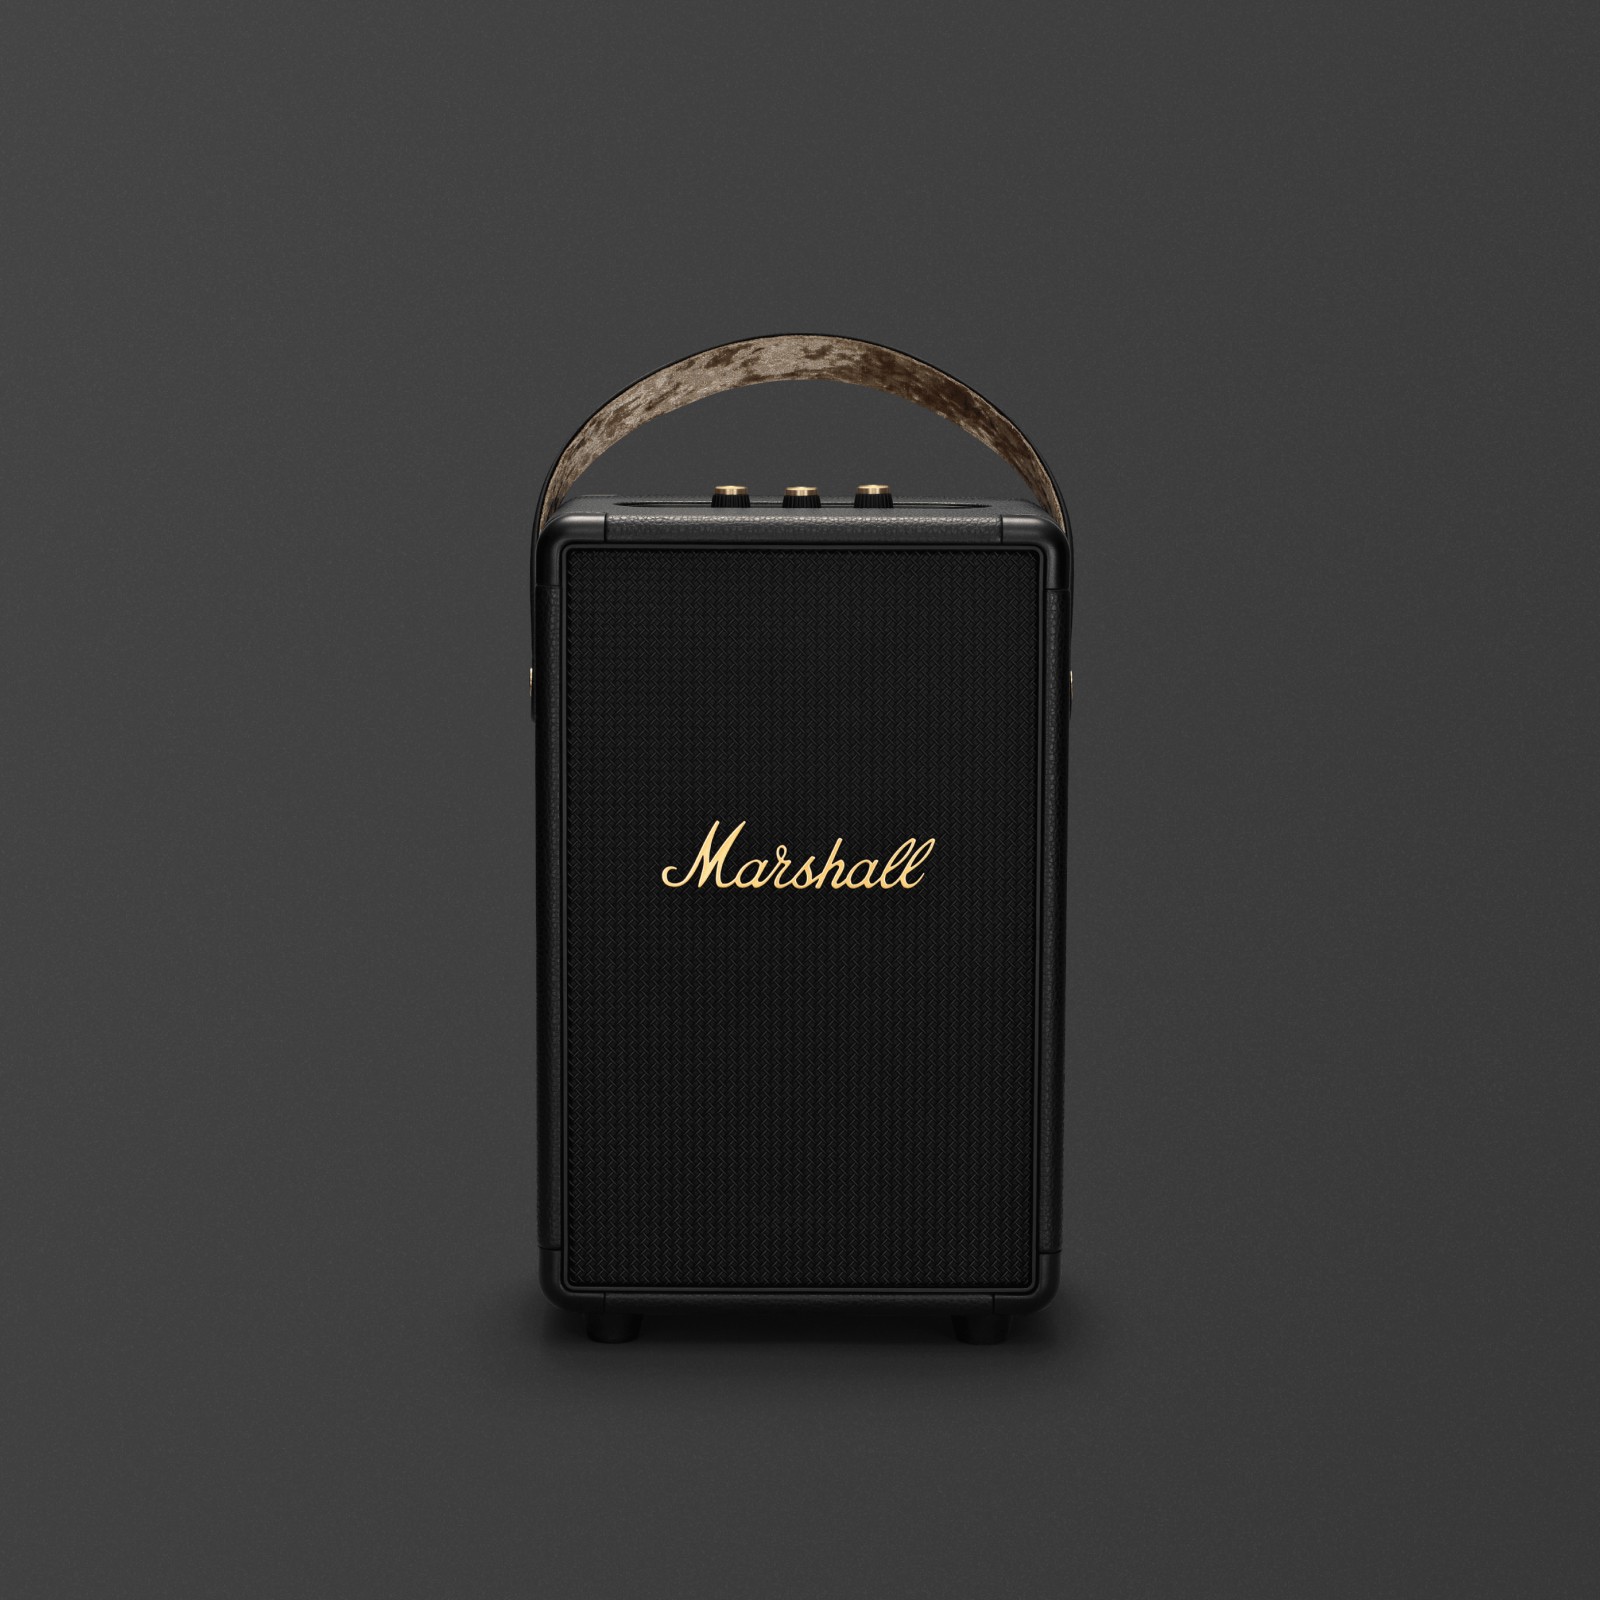 Marshall Tufton Black & Brass Speaker front facing